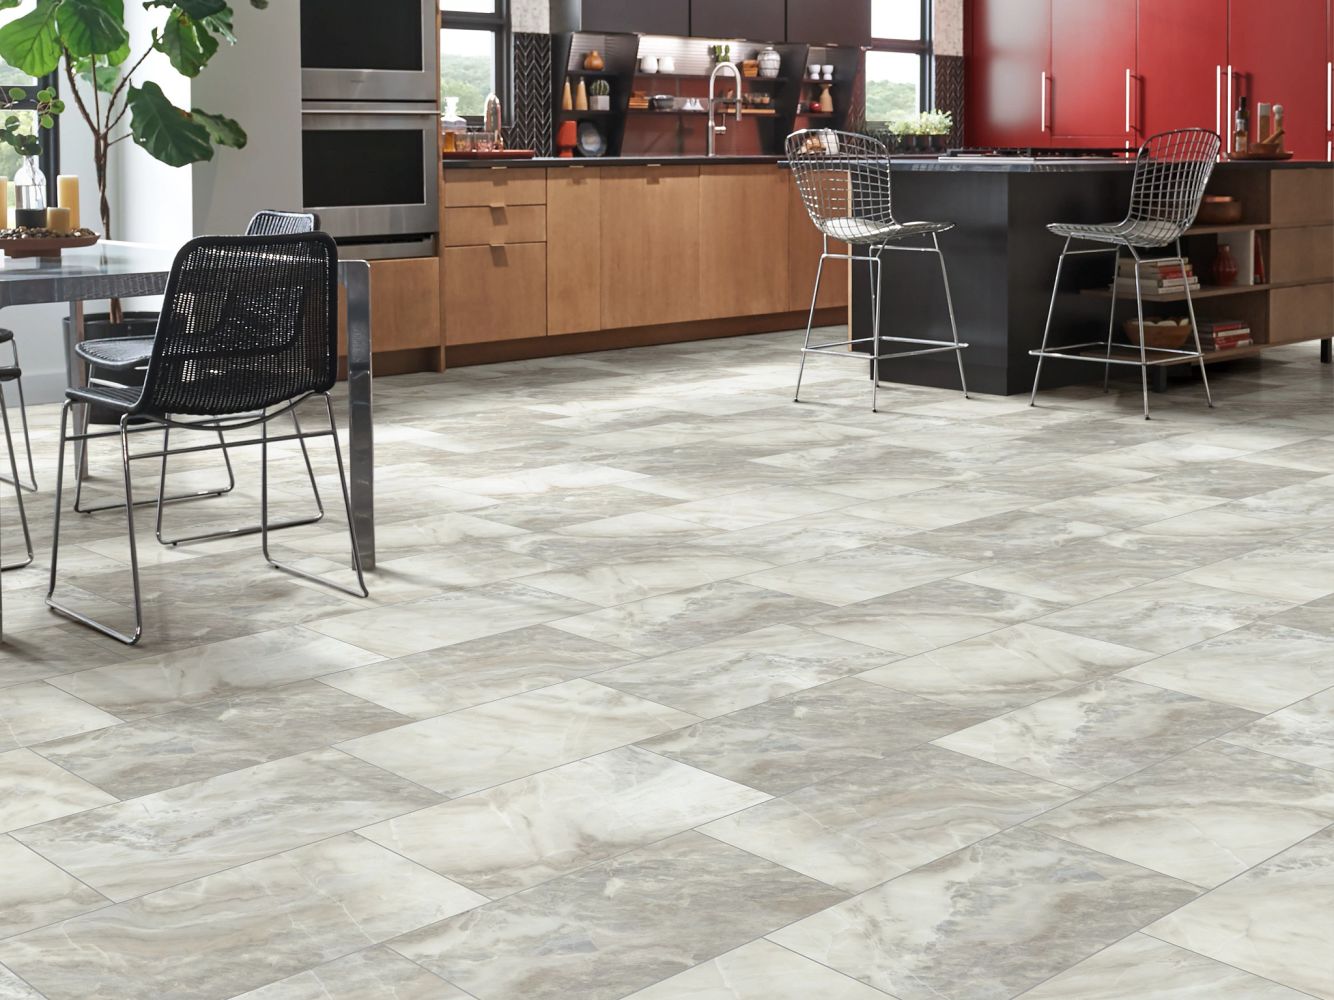 Shaw Floors Resilient Residential Paragon Tile Plus White Onyx 01101_1022V